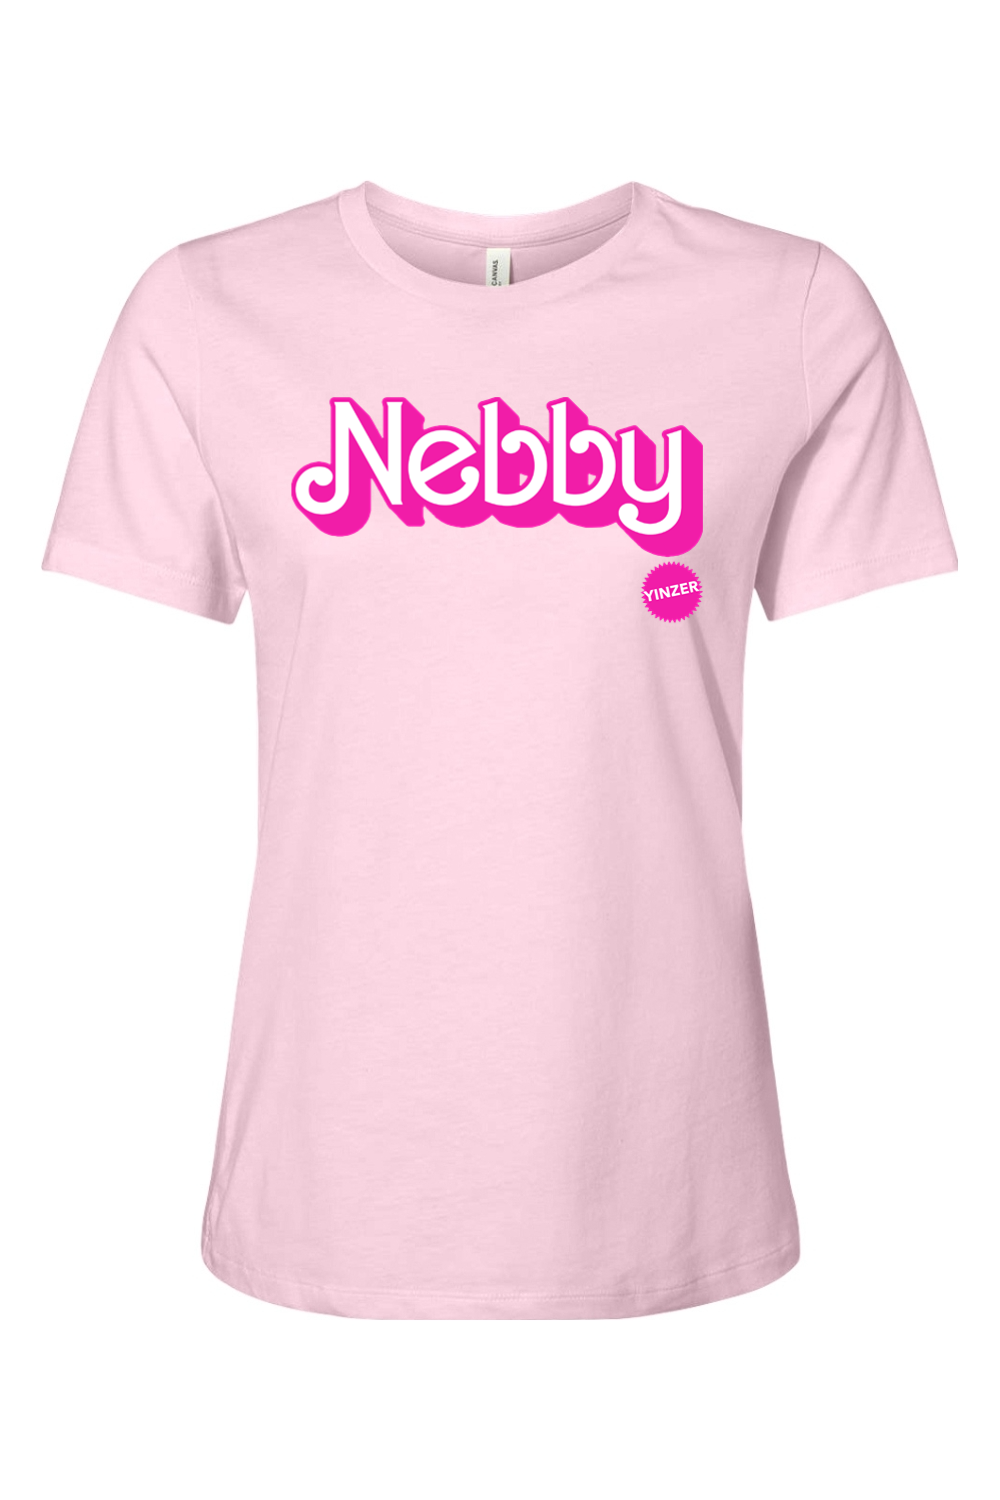 Malibu Nebby - Ladies Tee - Yinzylvania